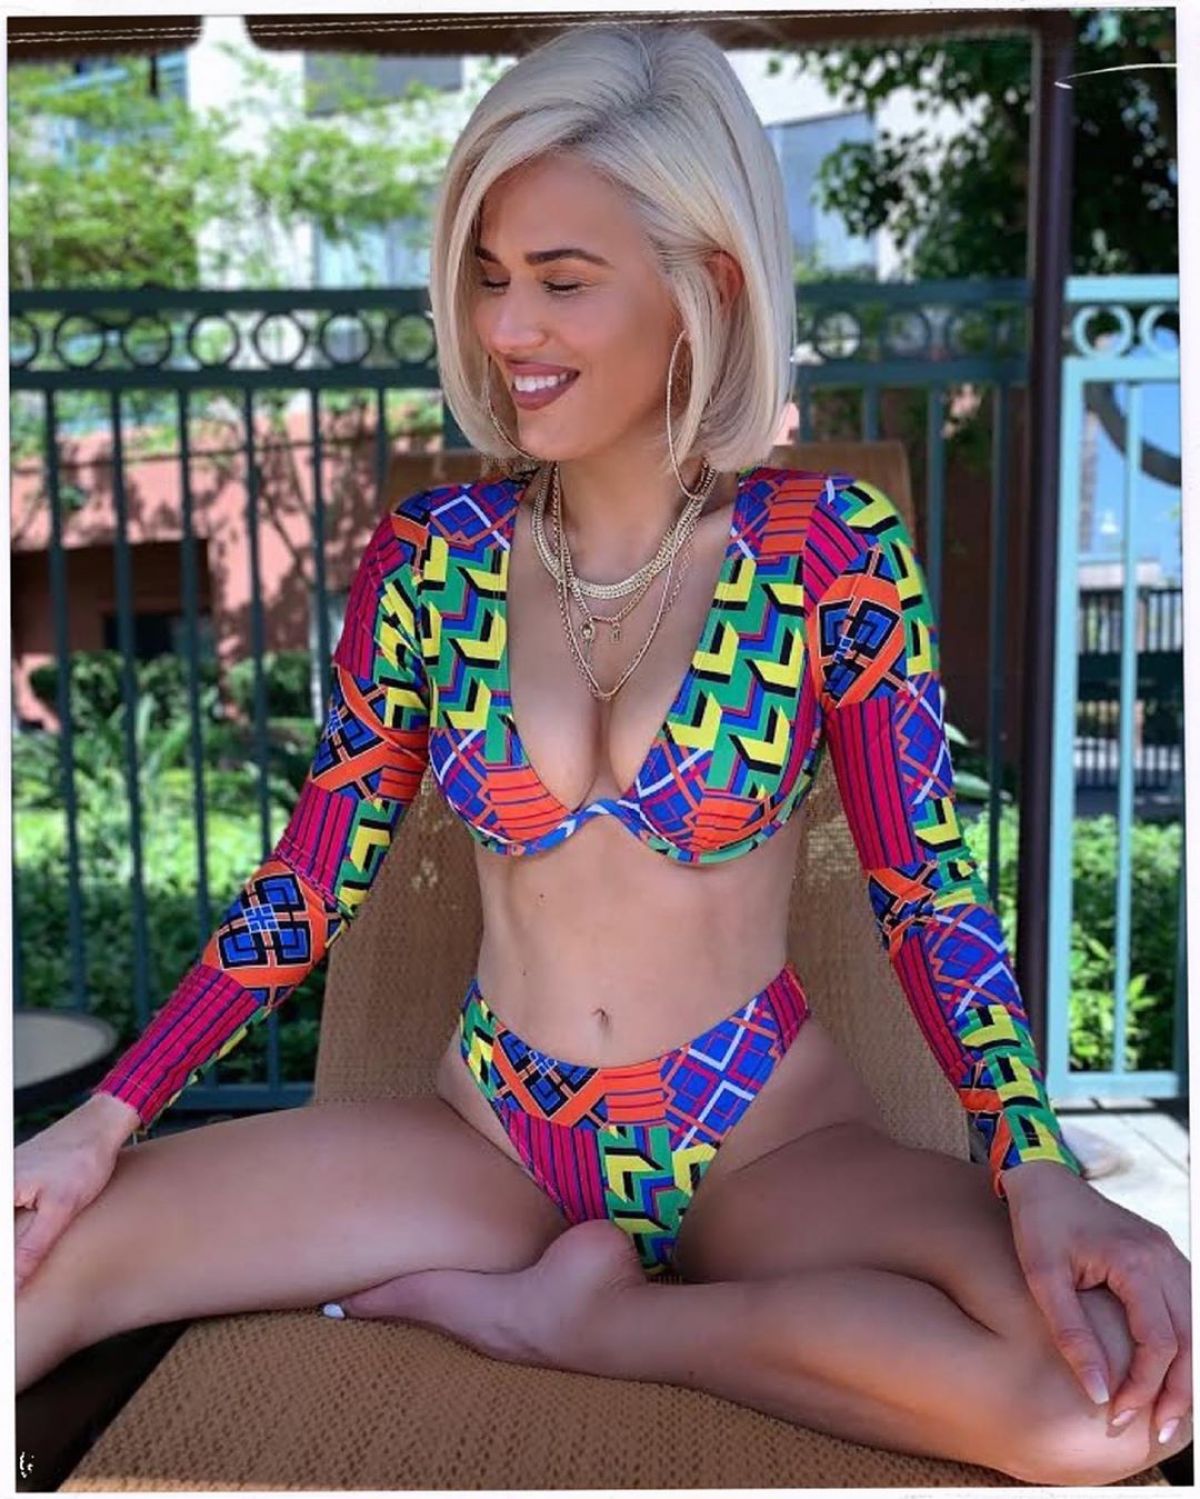 LANA CJ PERRY in Bikini - Instagram Photos 09/22/2020. 